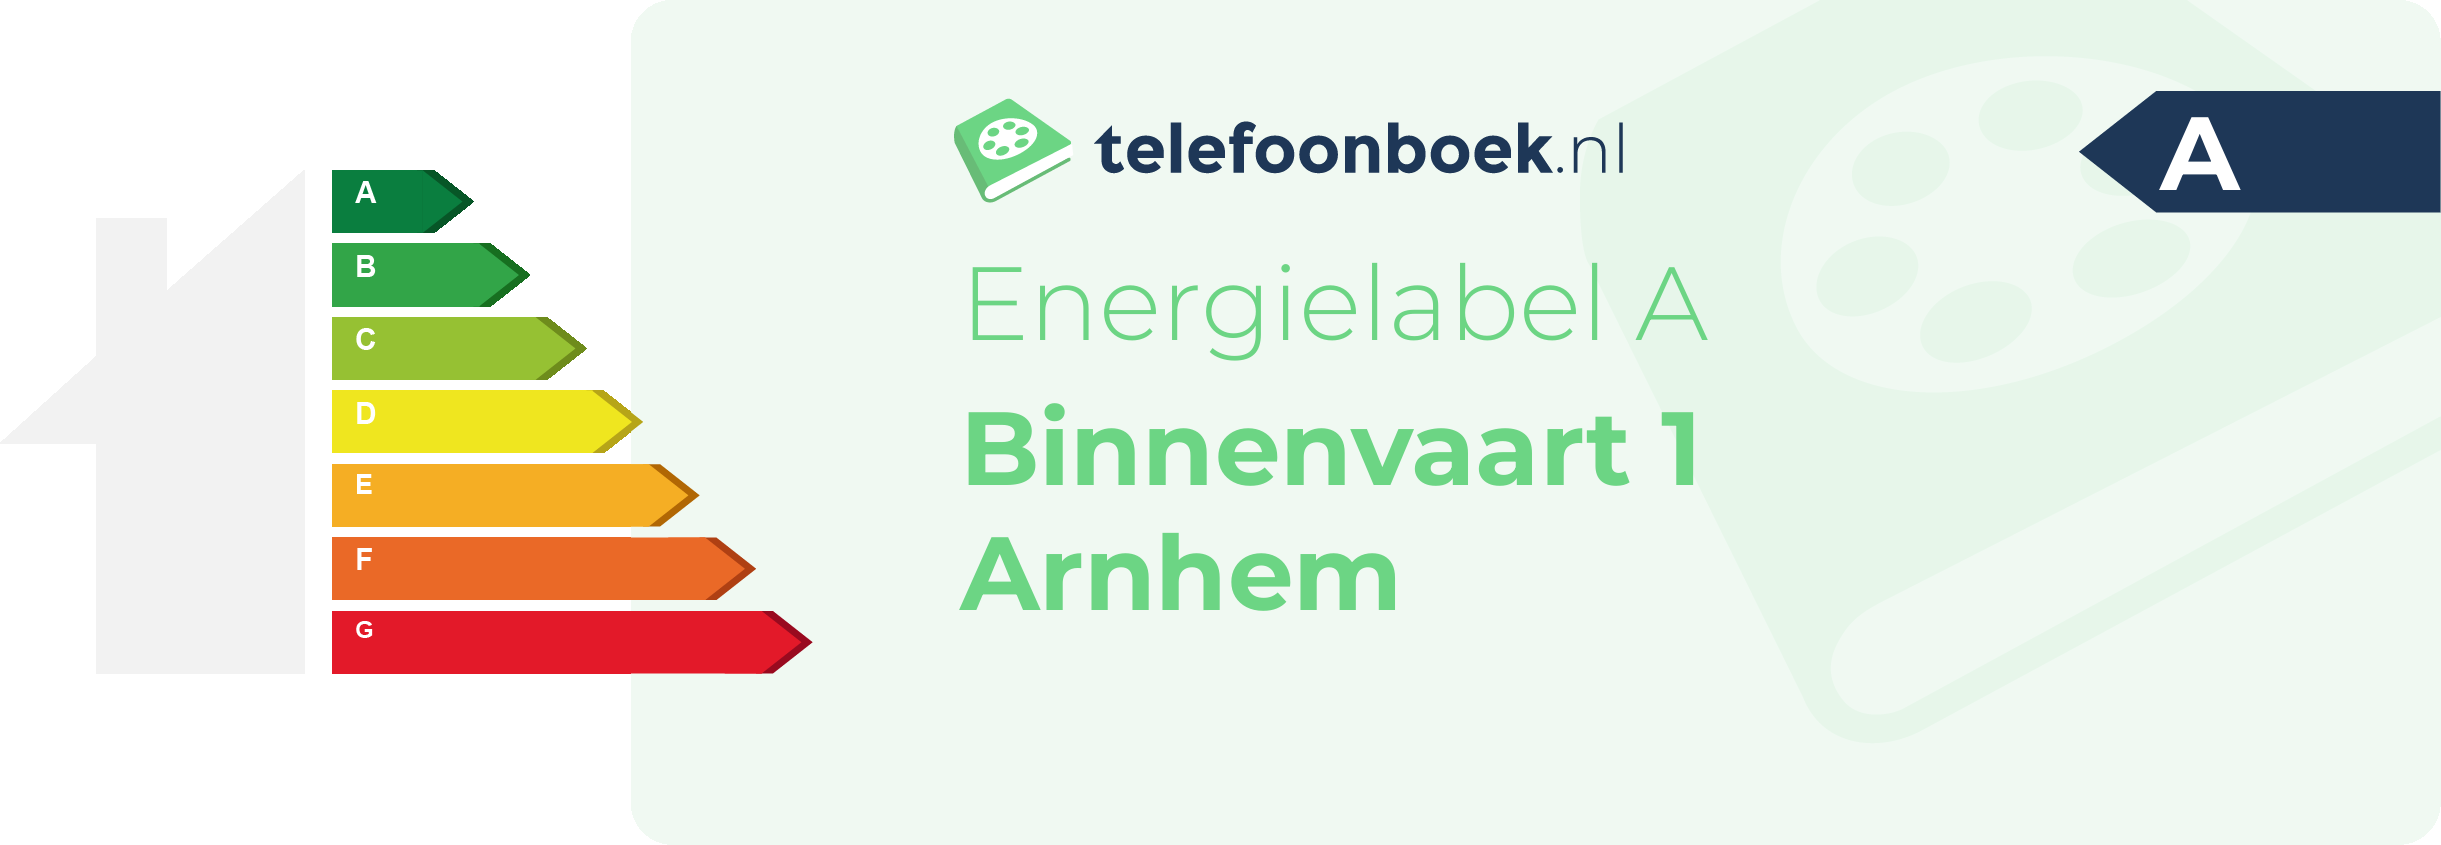 Energielabel Binnenvaart 1 Arnhem